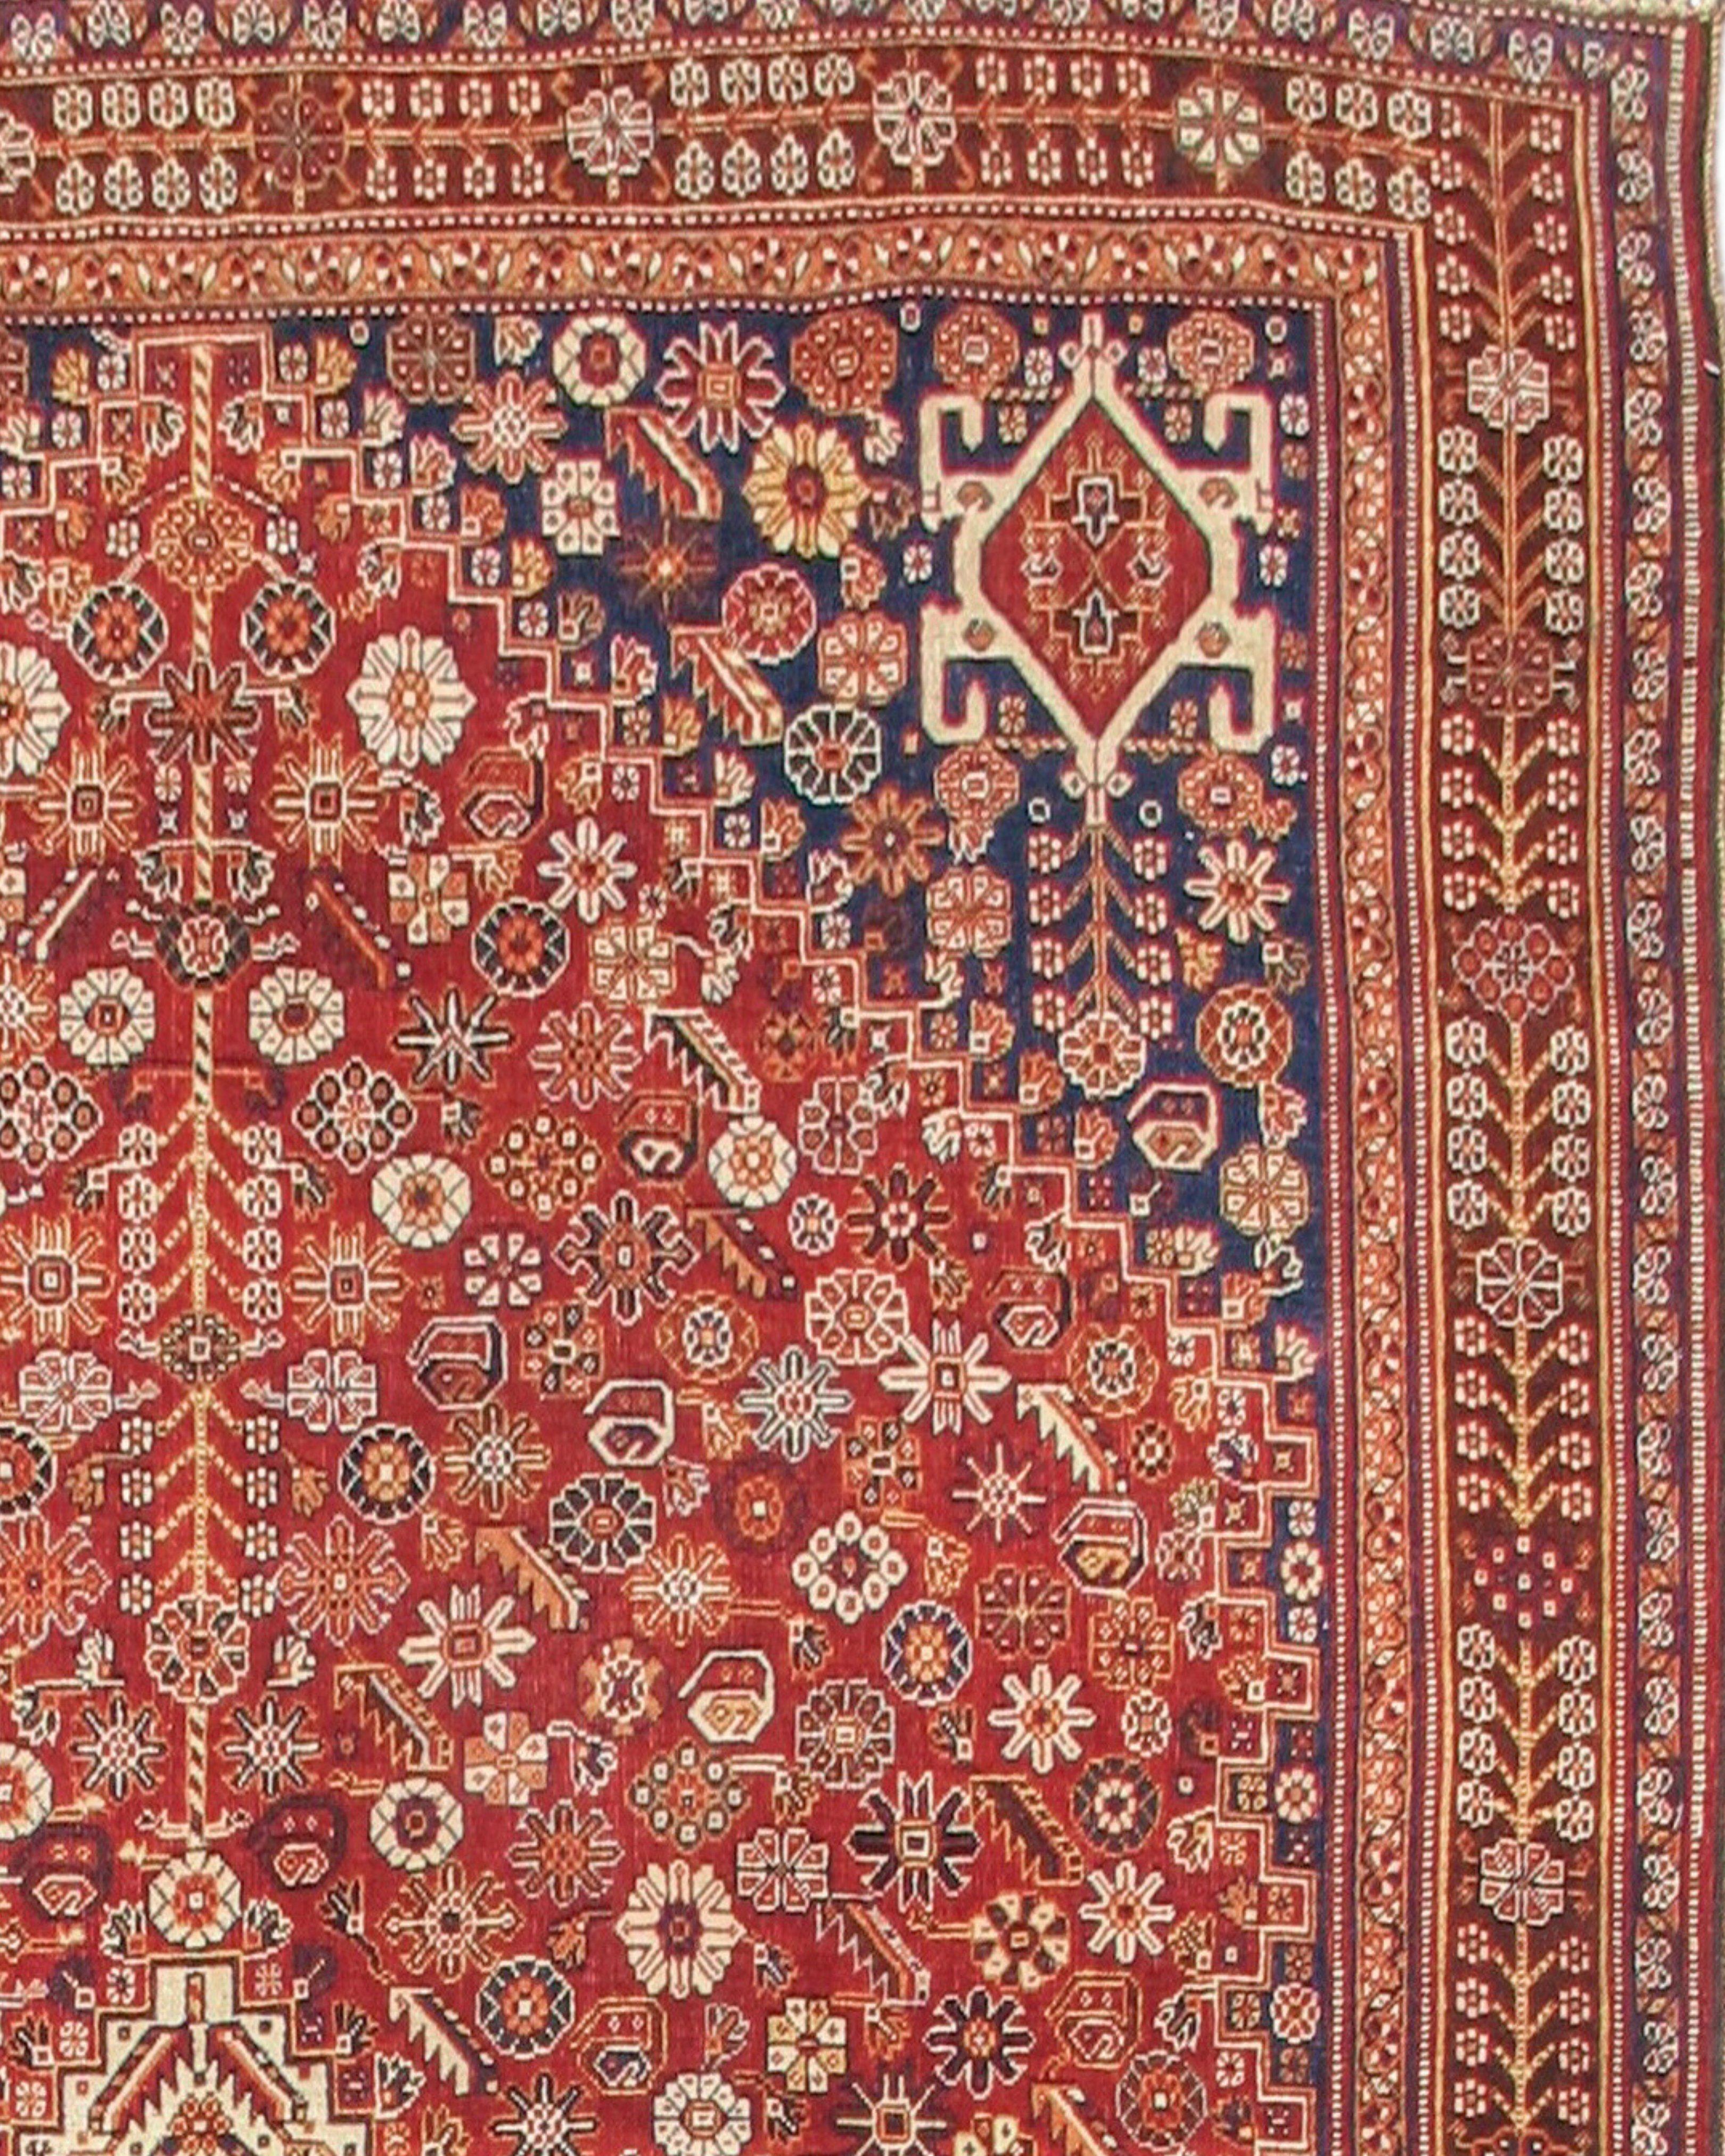 Antique Persian Qashqai Rug, c. 1900

Additional Information:
Dimensions: 5'5